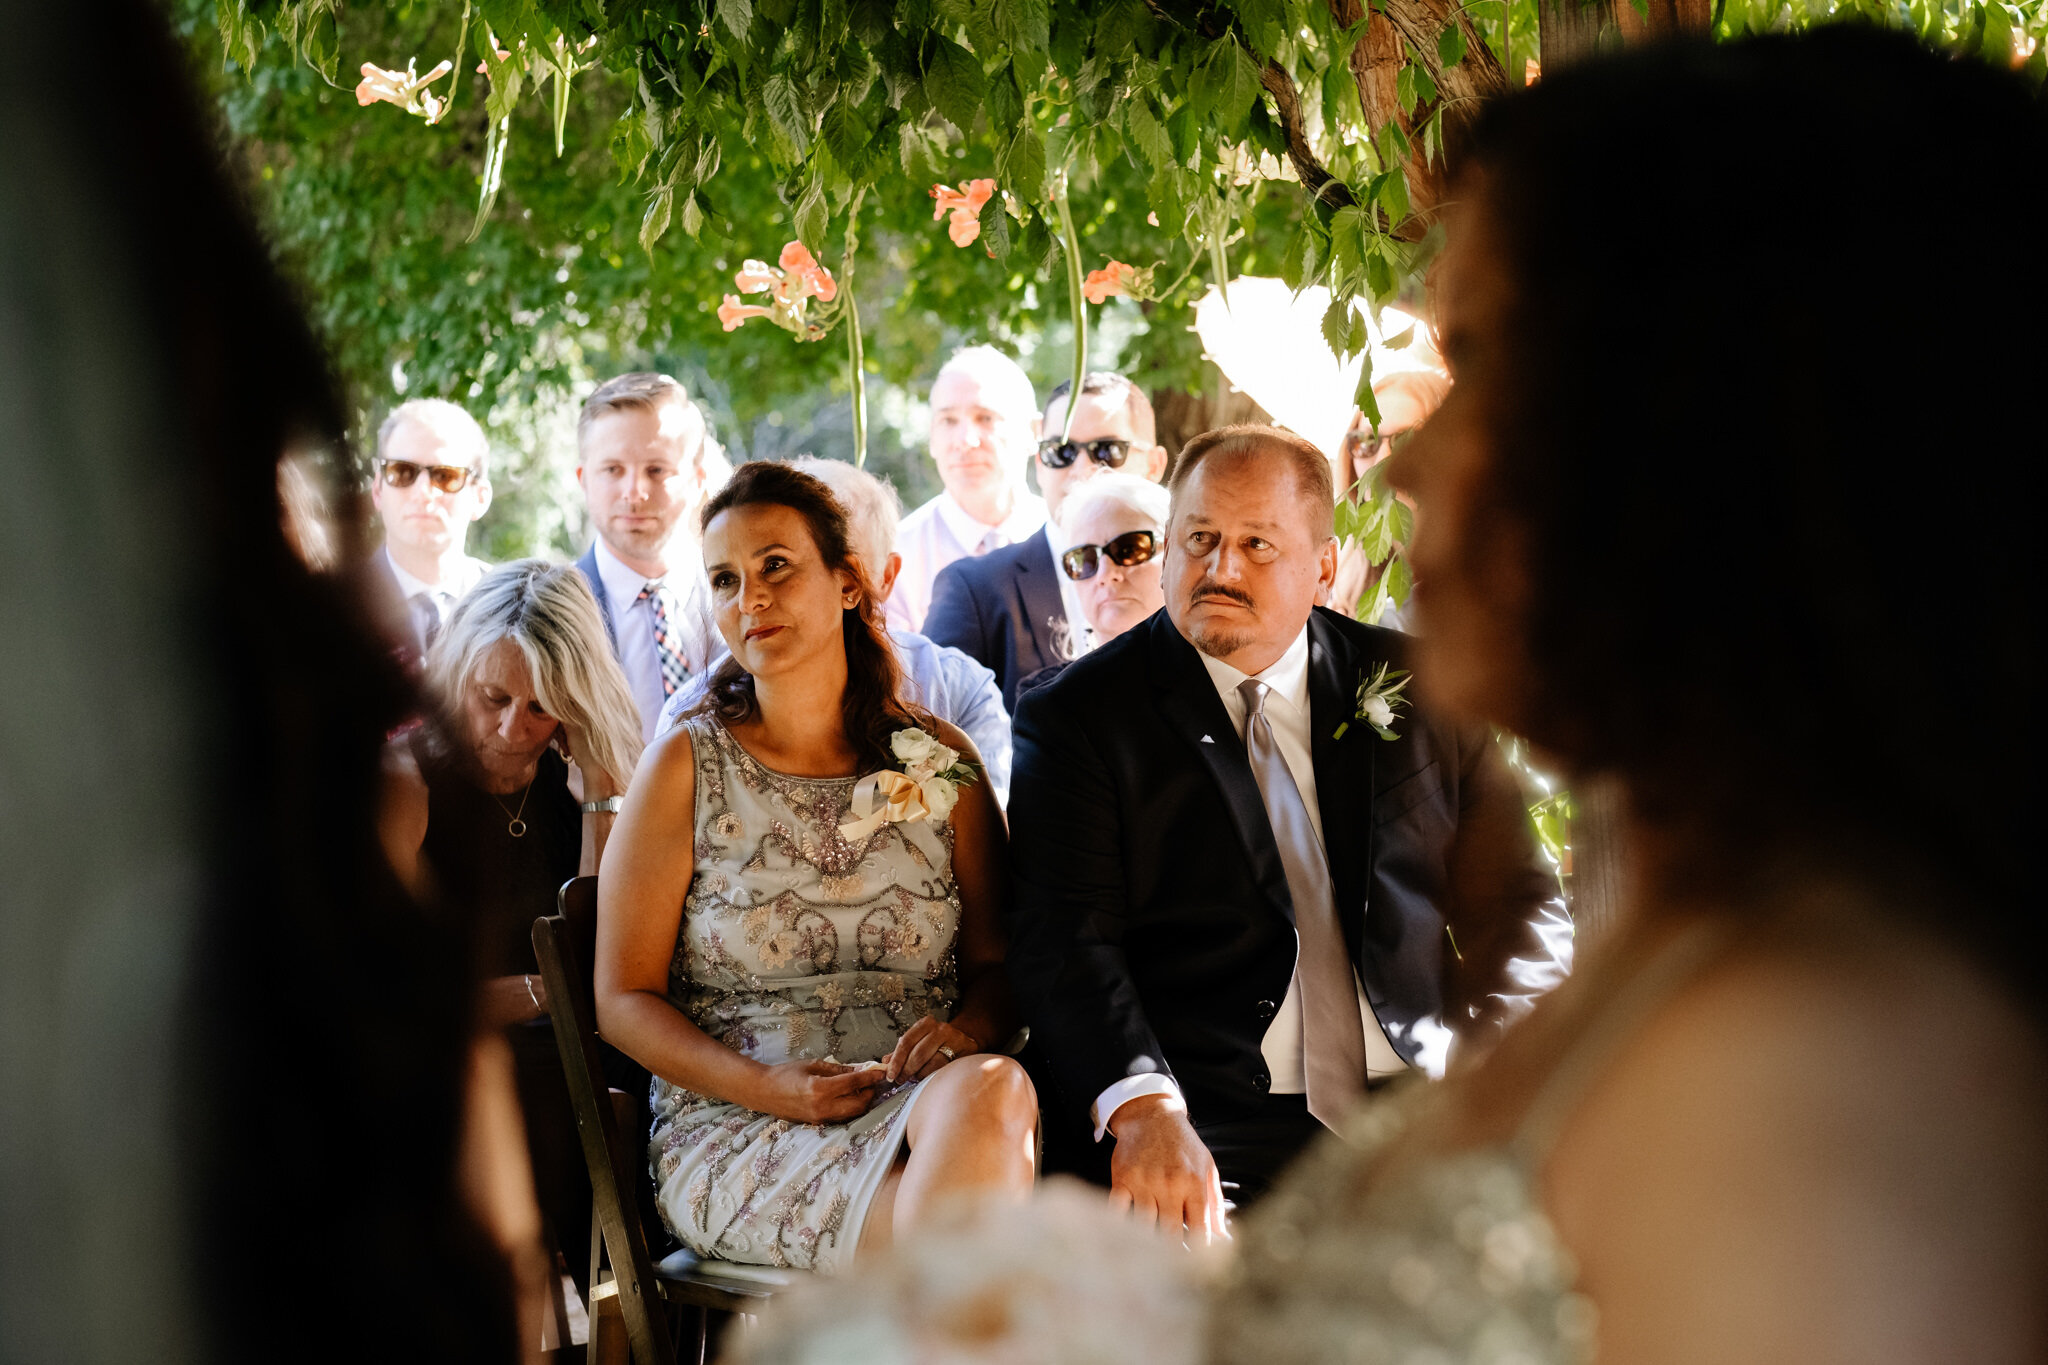 boonville-hotel-wedding-mendocino-documentary-wedding-photographer-melissa-habegger-028.jpg